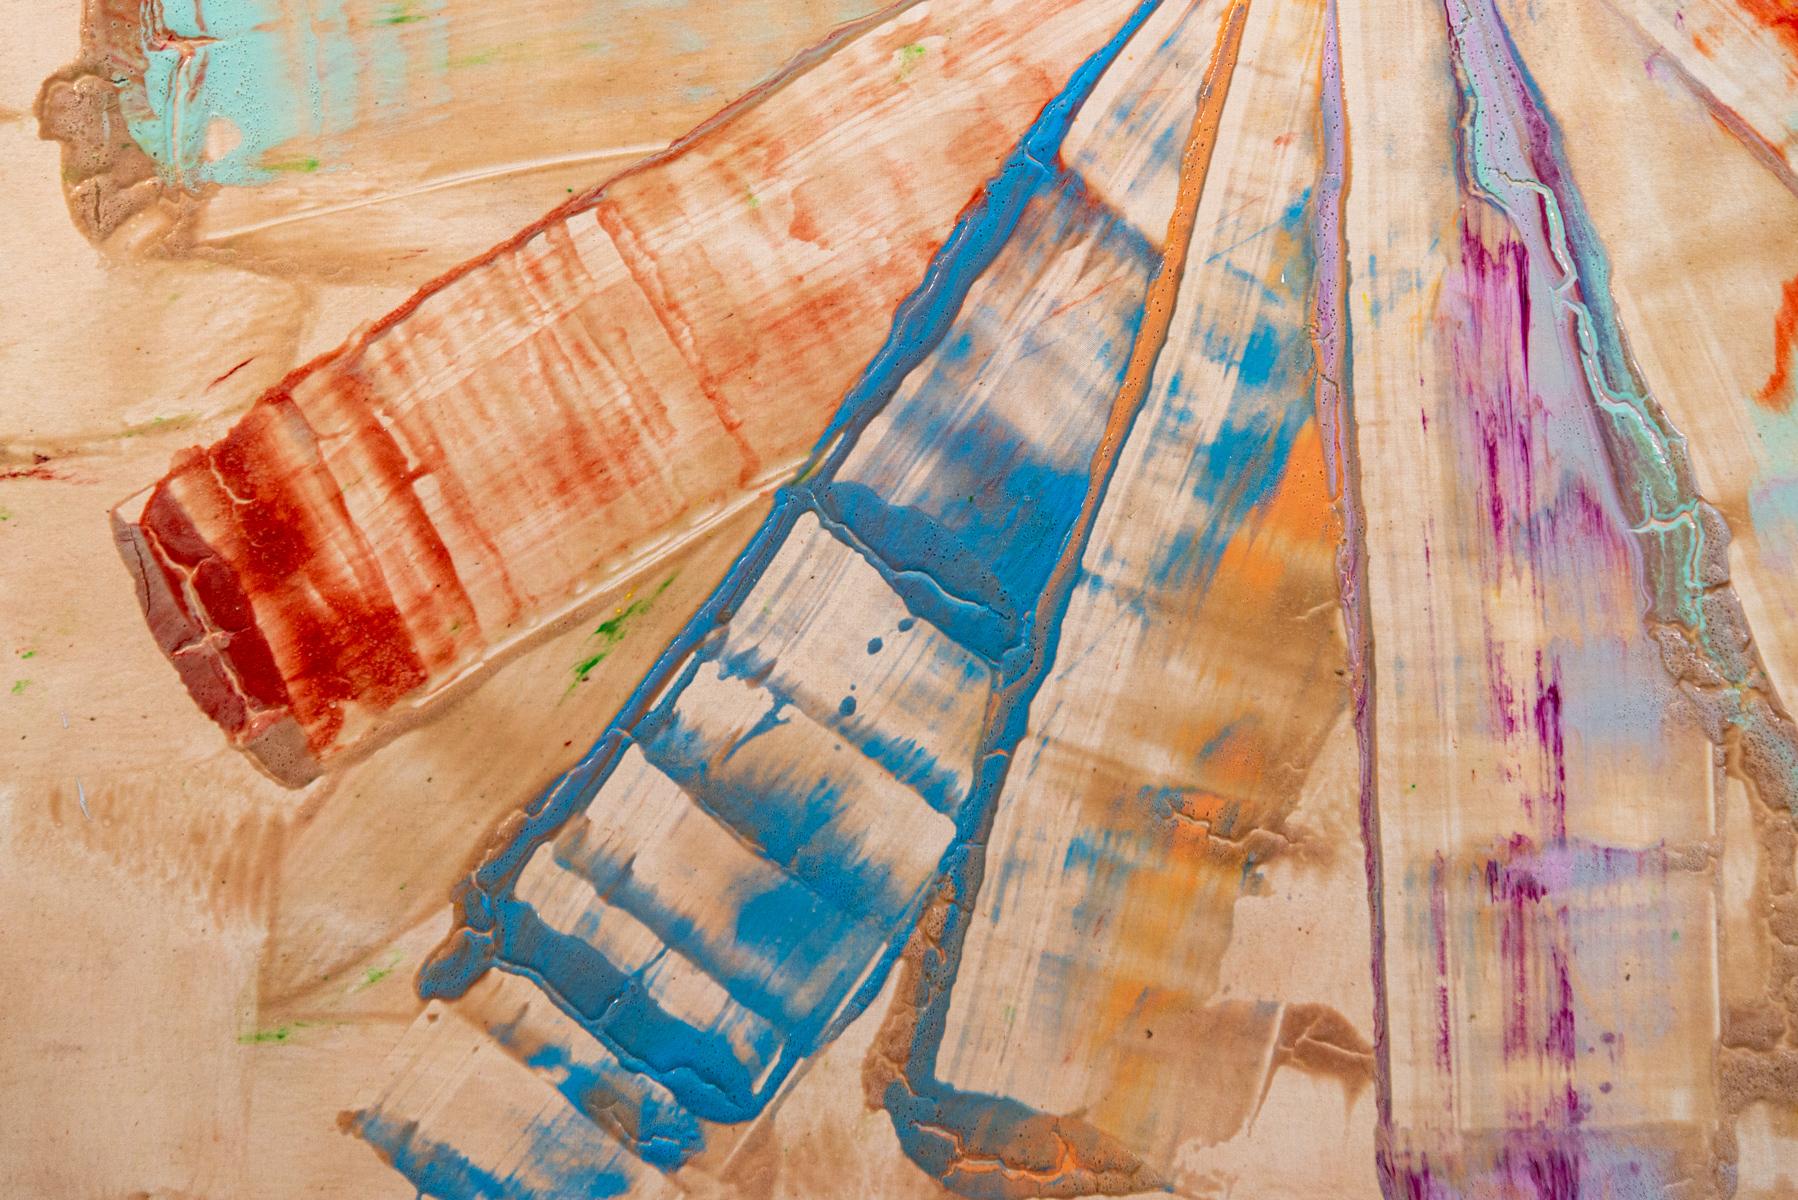 Radio John - large, colourful, impasto, gestural abstract, acrylic on canvas 4